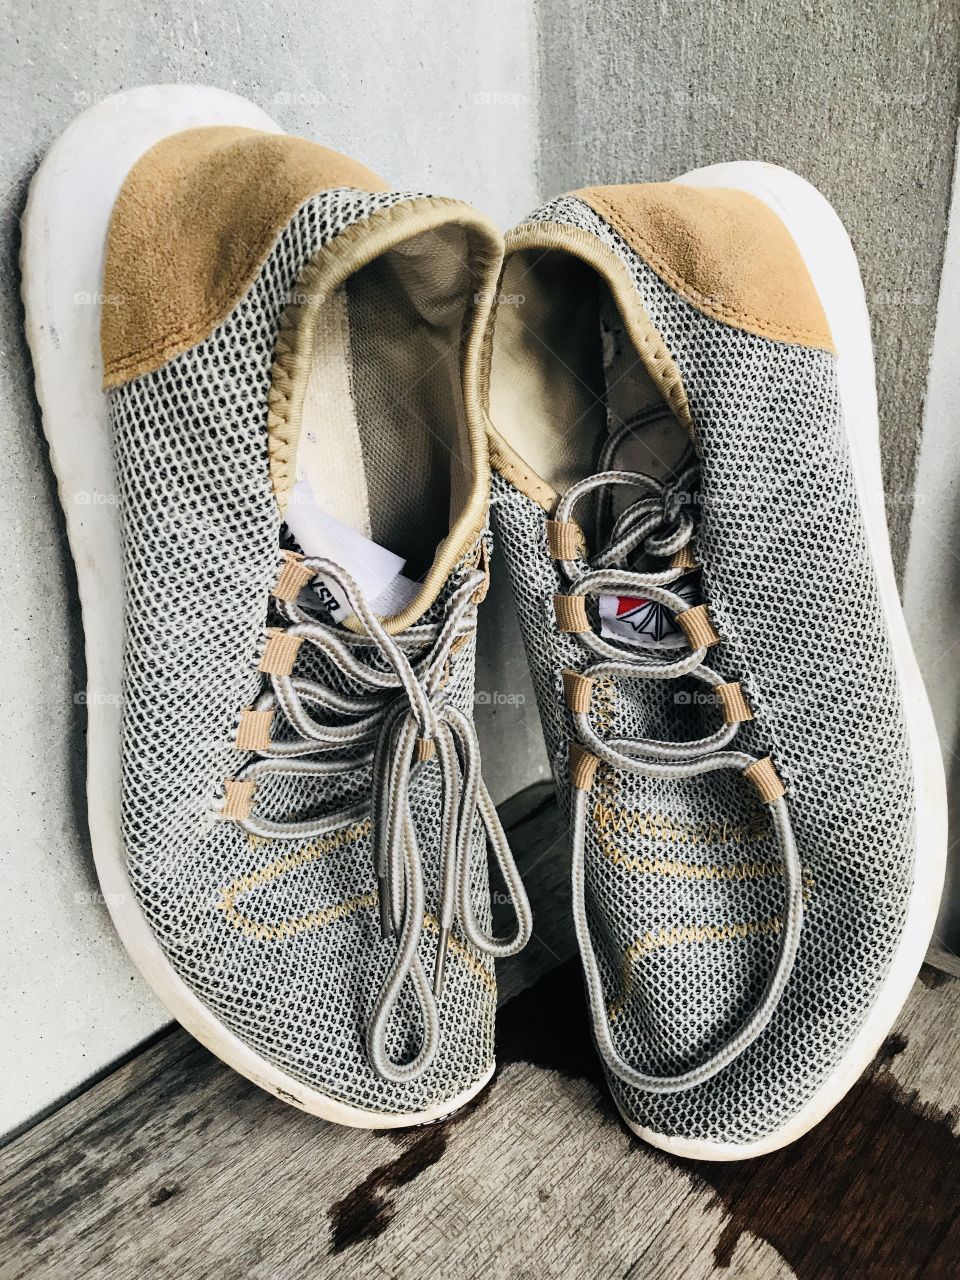 Nice pair of Shoe !